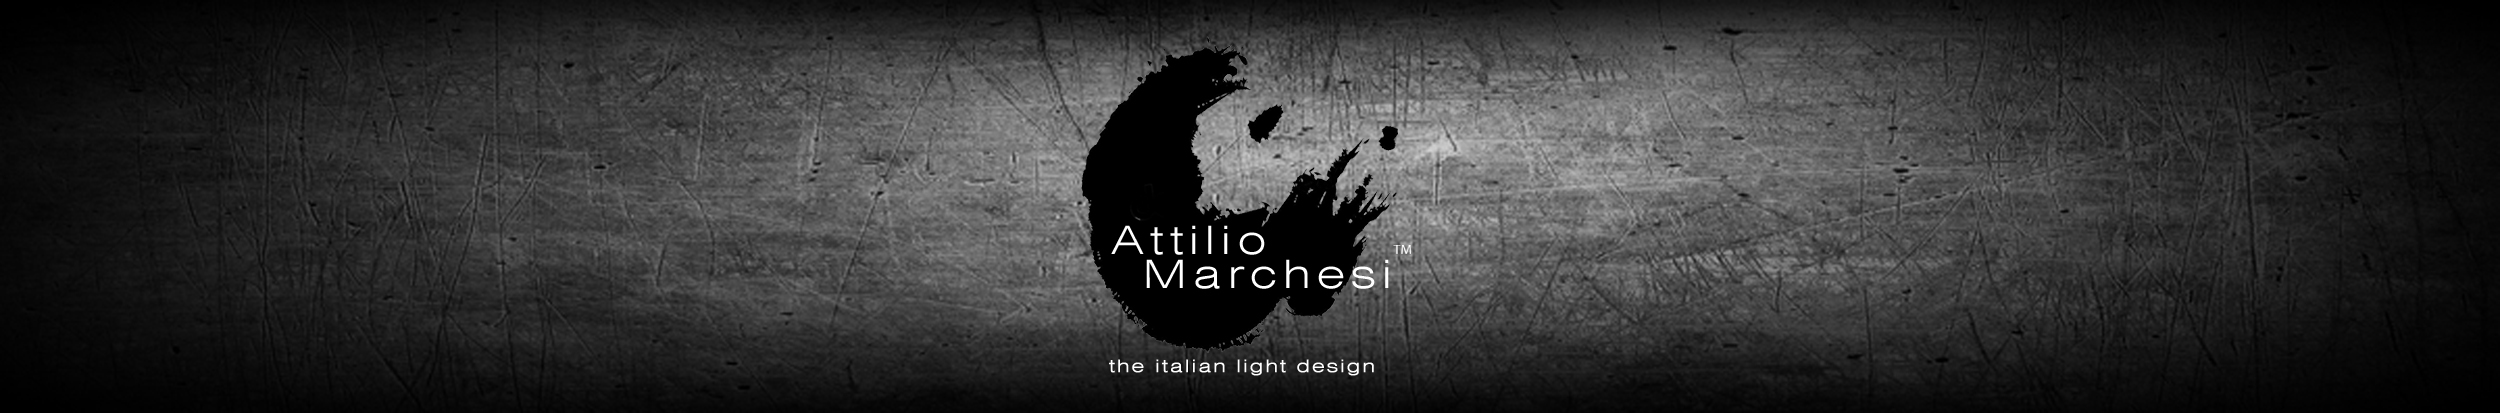 Attilio Marchesi